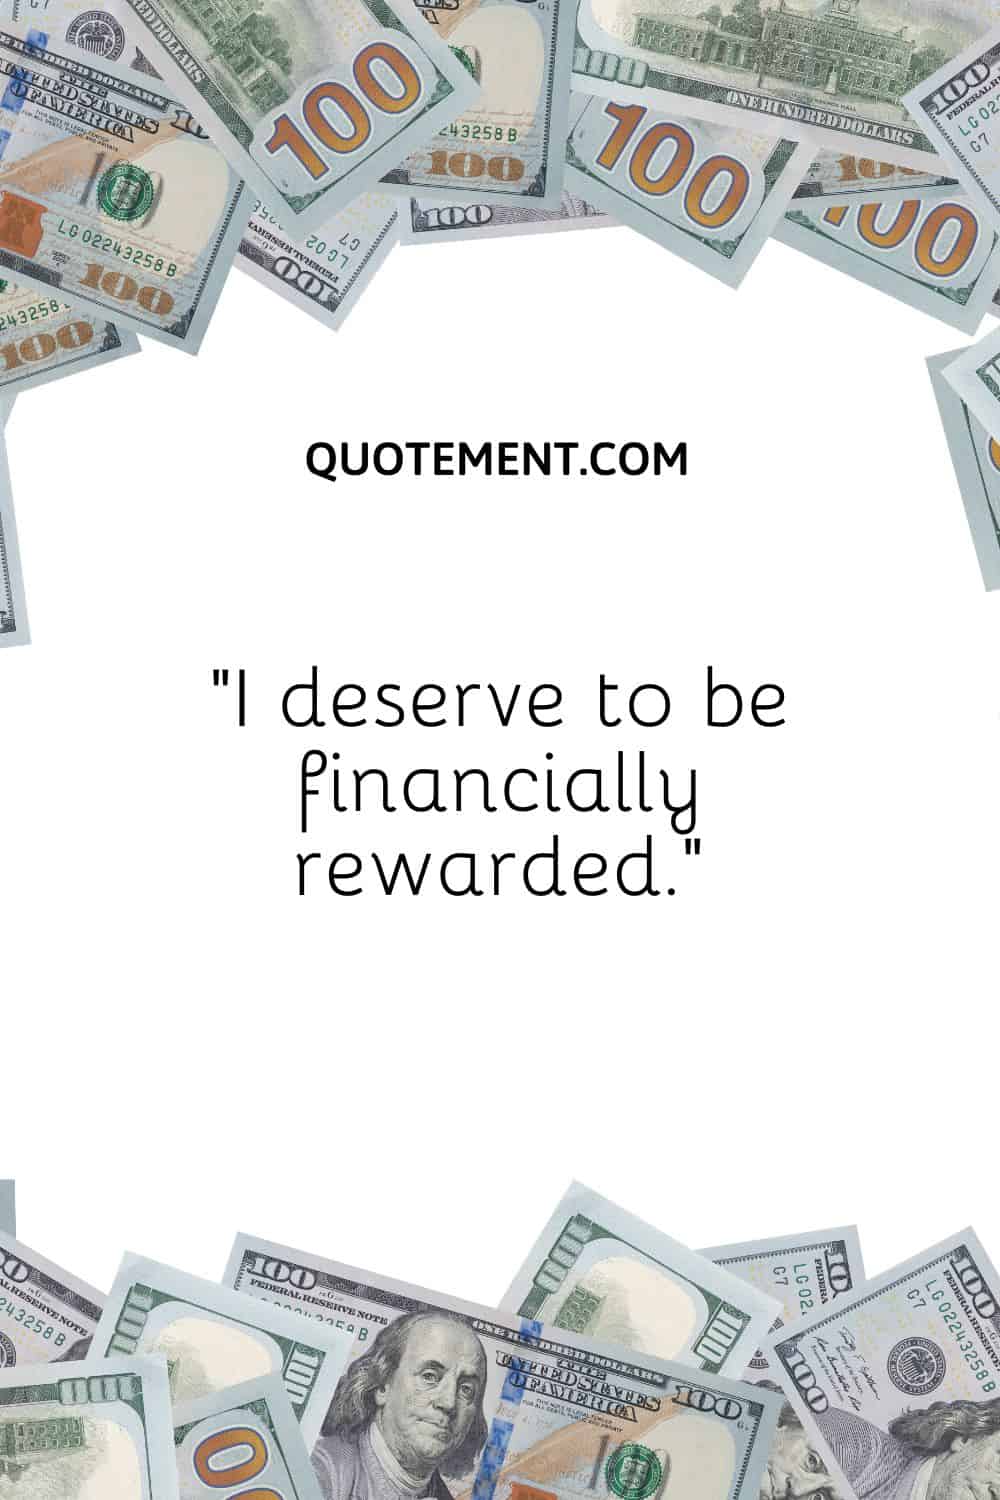 “I deserve to be financially rewarded.”